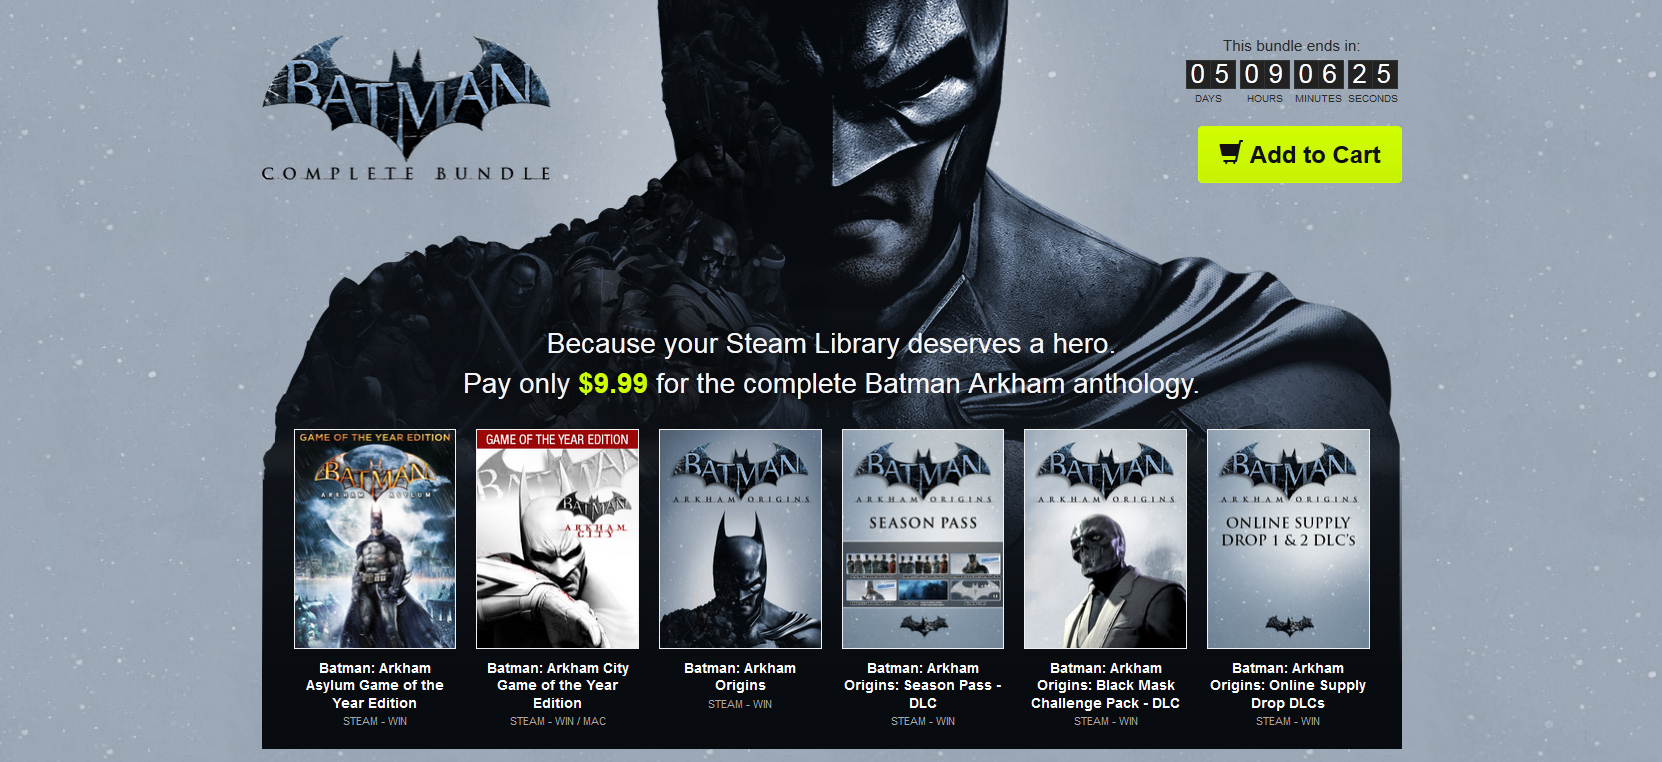 Get All Batman Arkham Games on PC For $10 - GameSpot